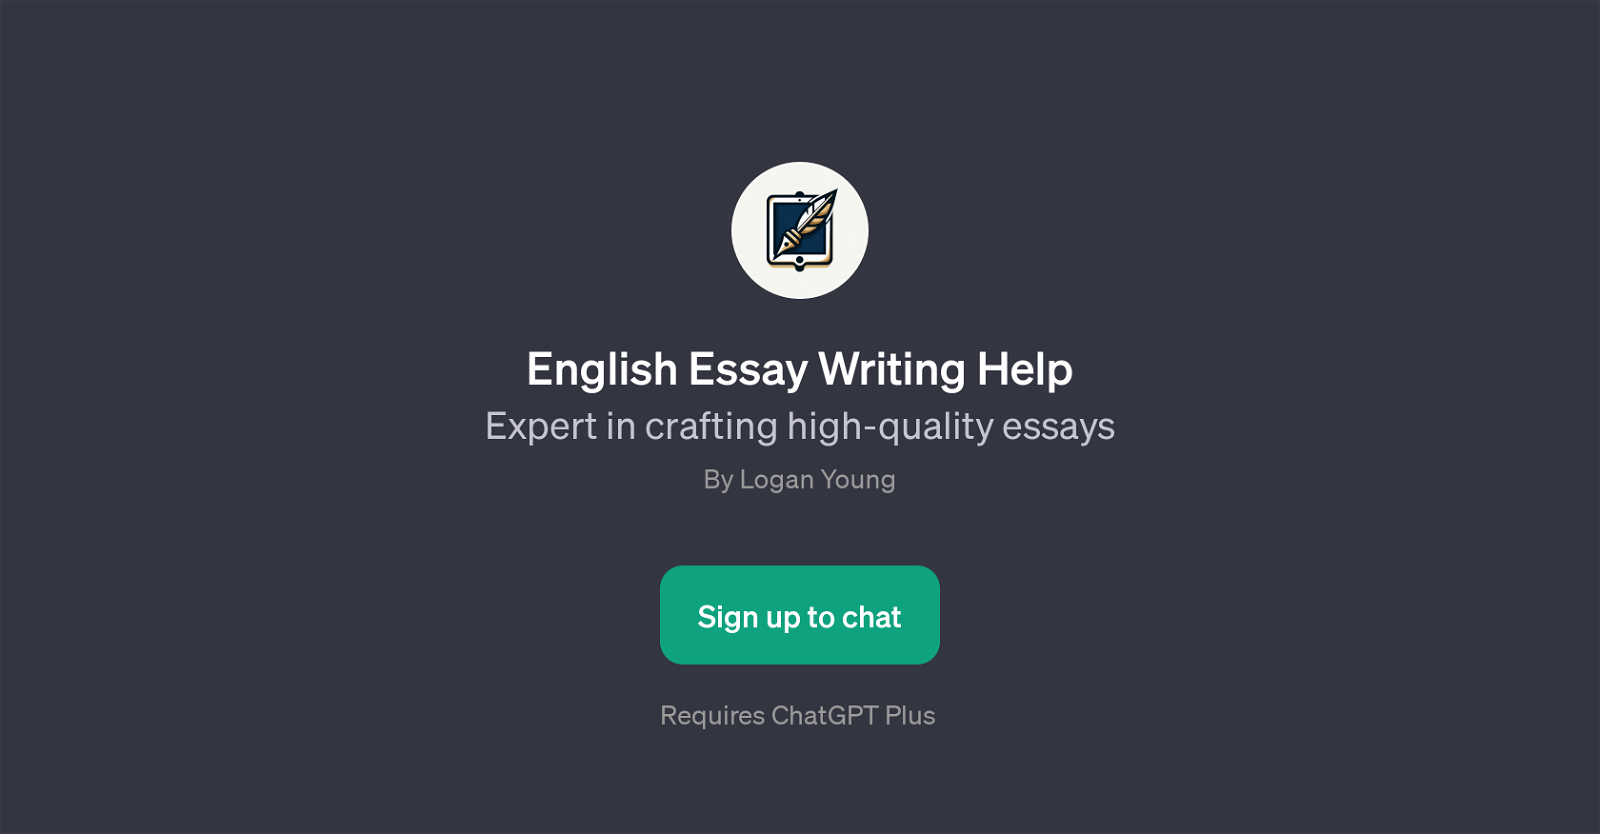 English Essay Writing Help website